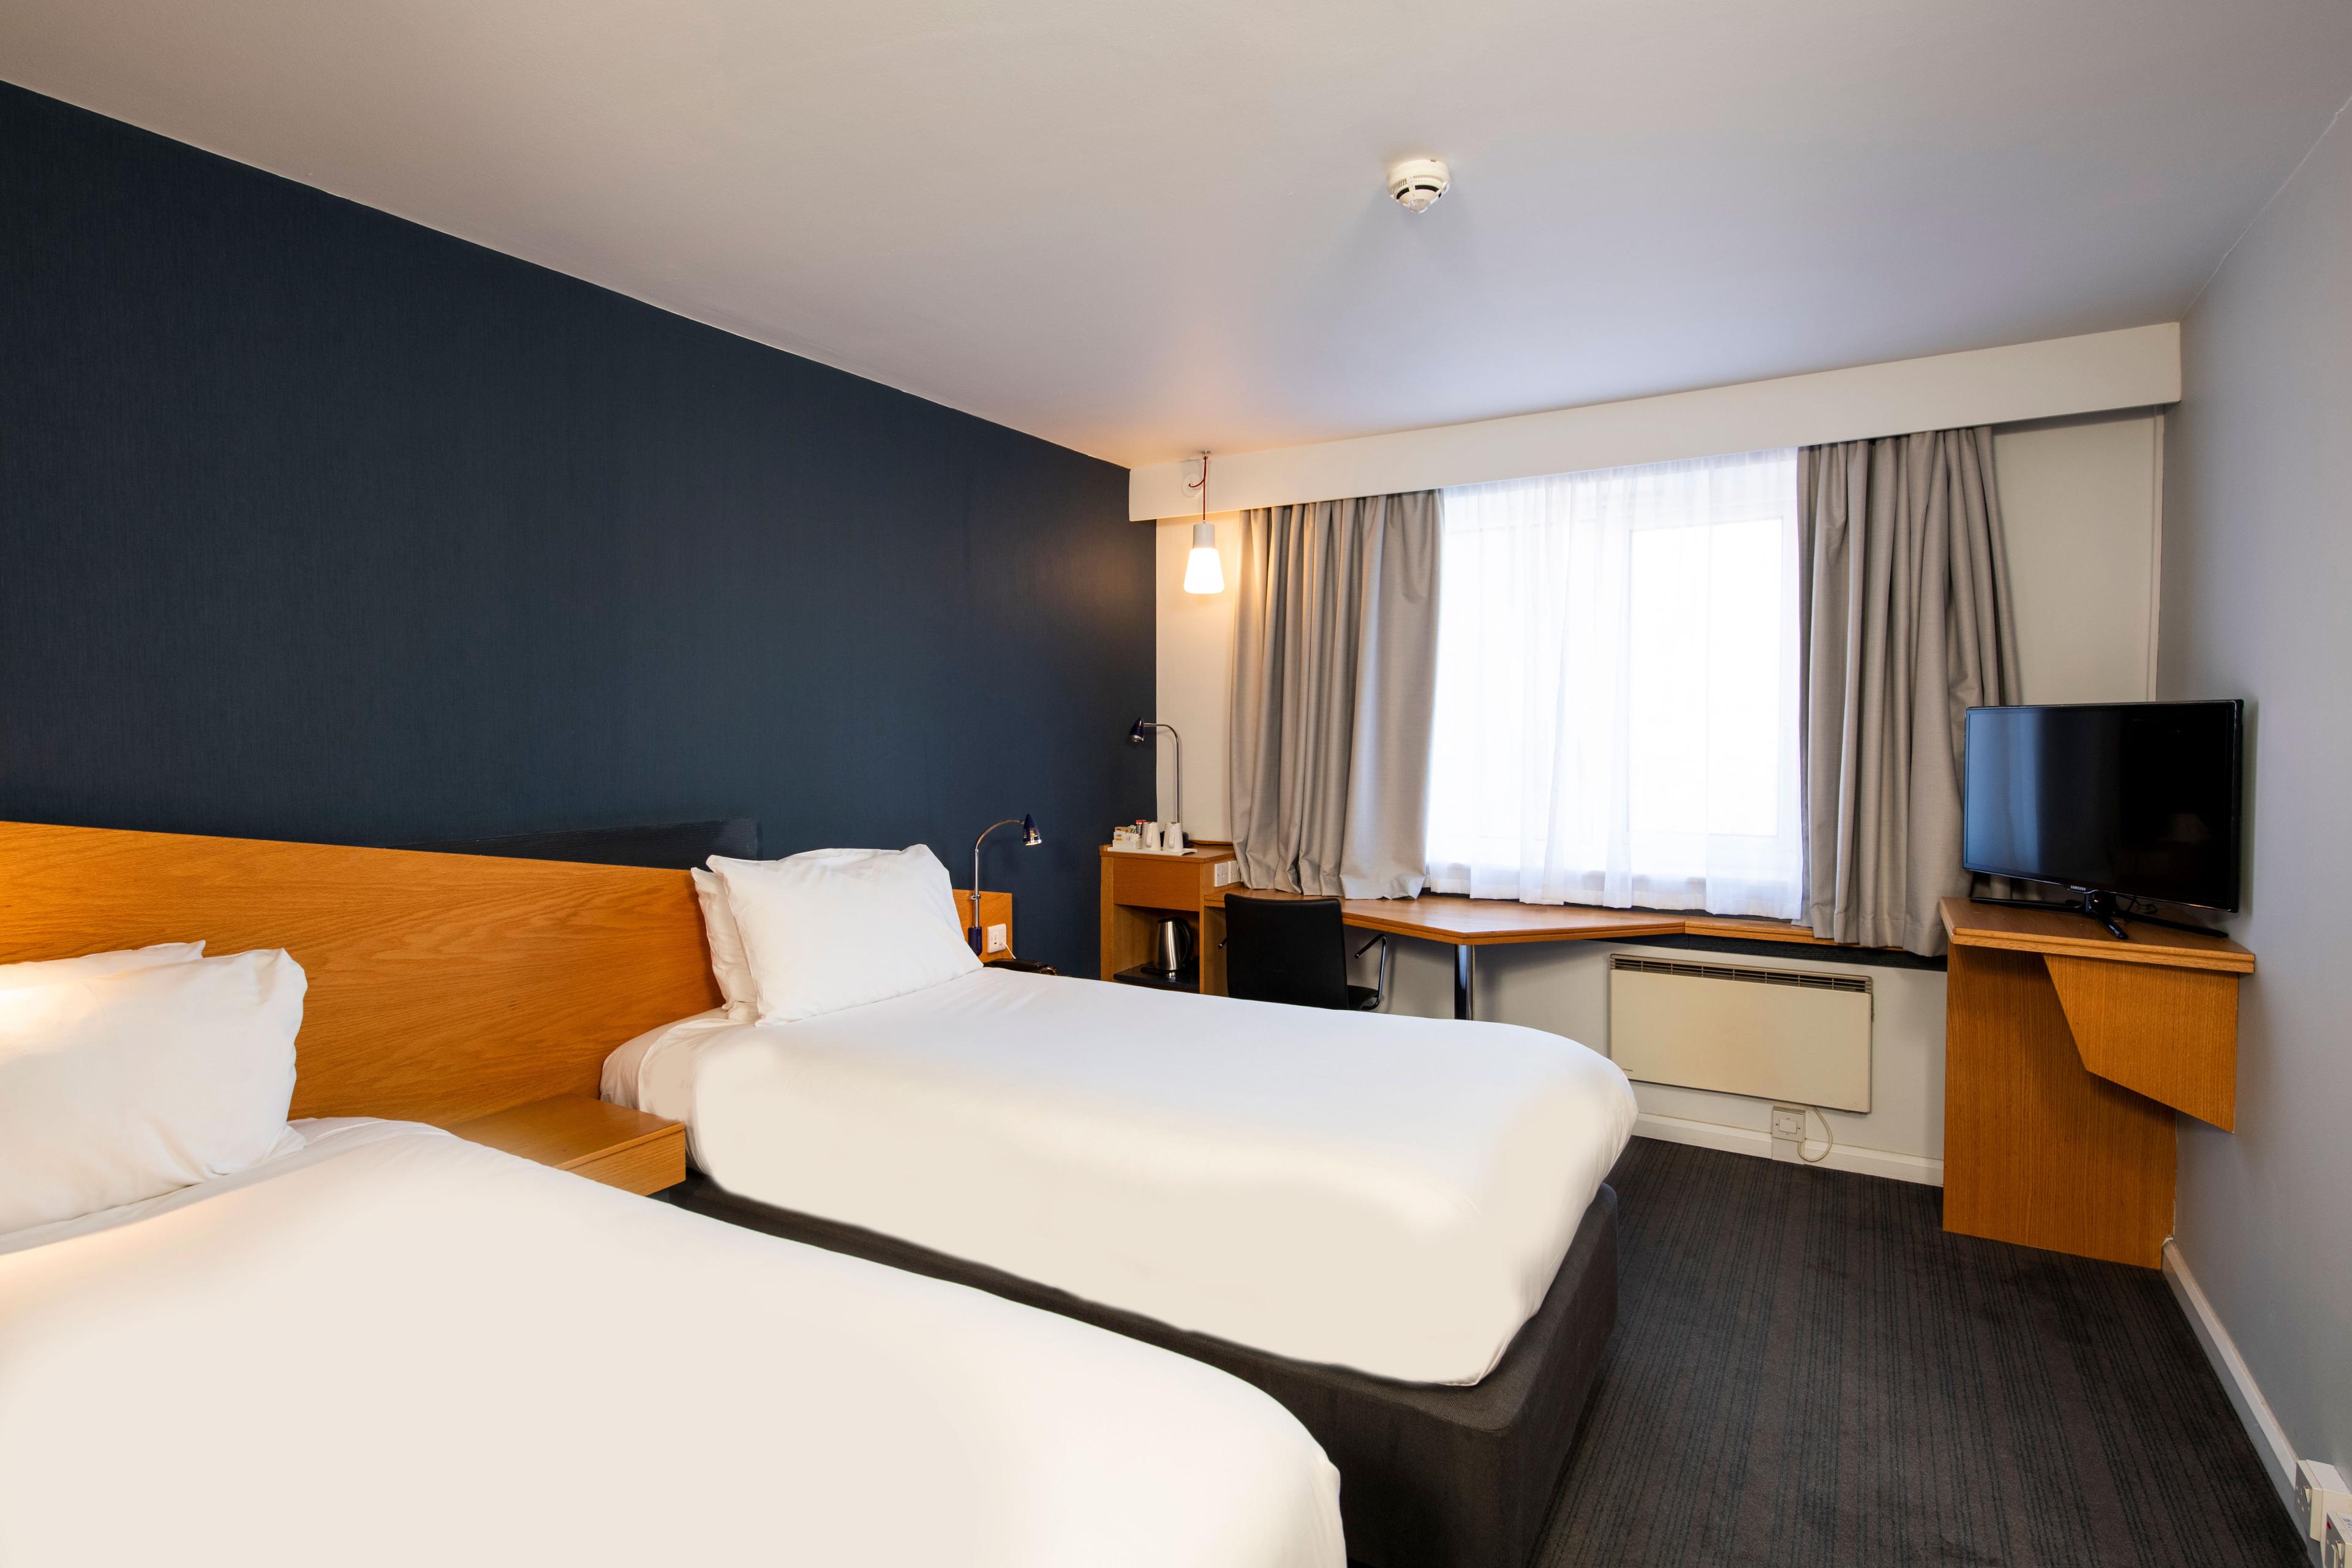 Our Leeds City Centre hotel has convenient twin rooms.